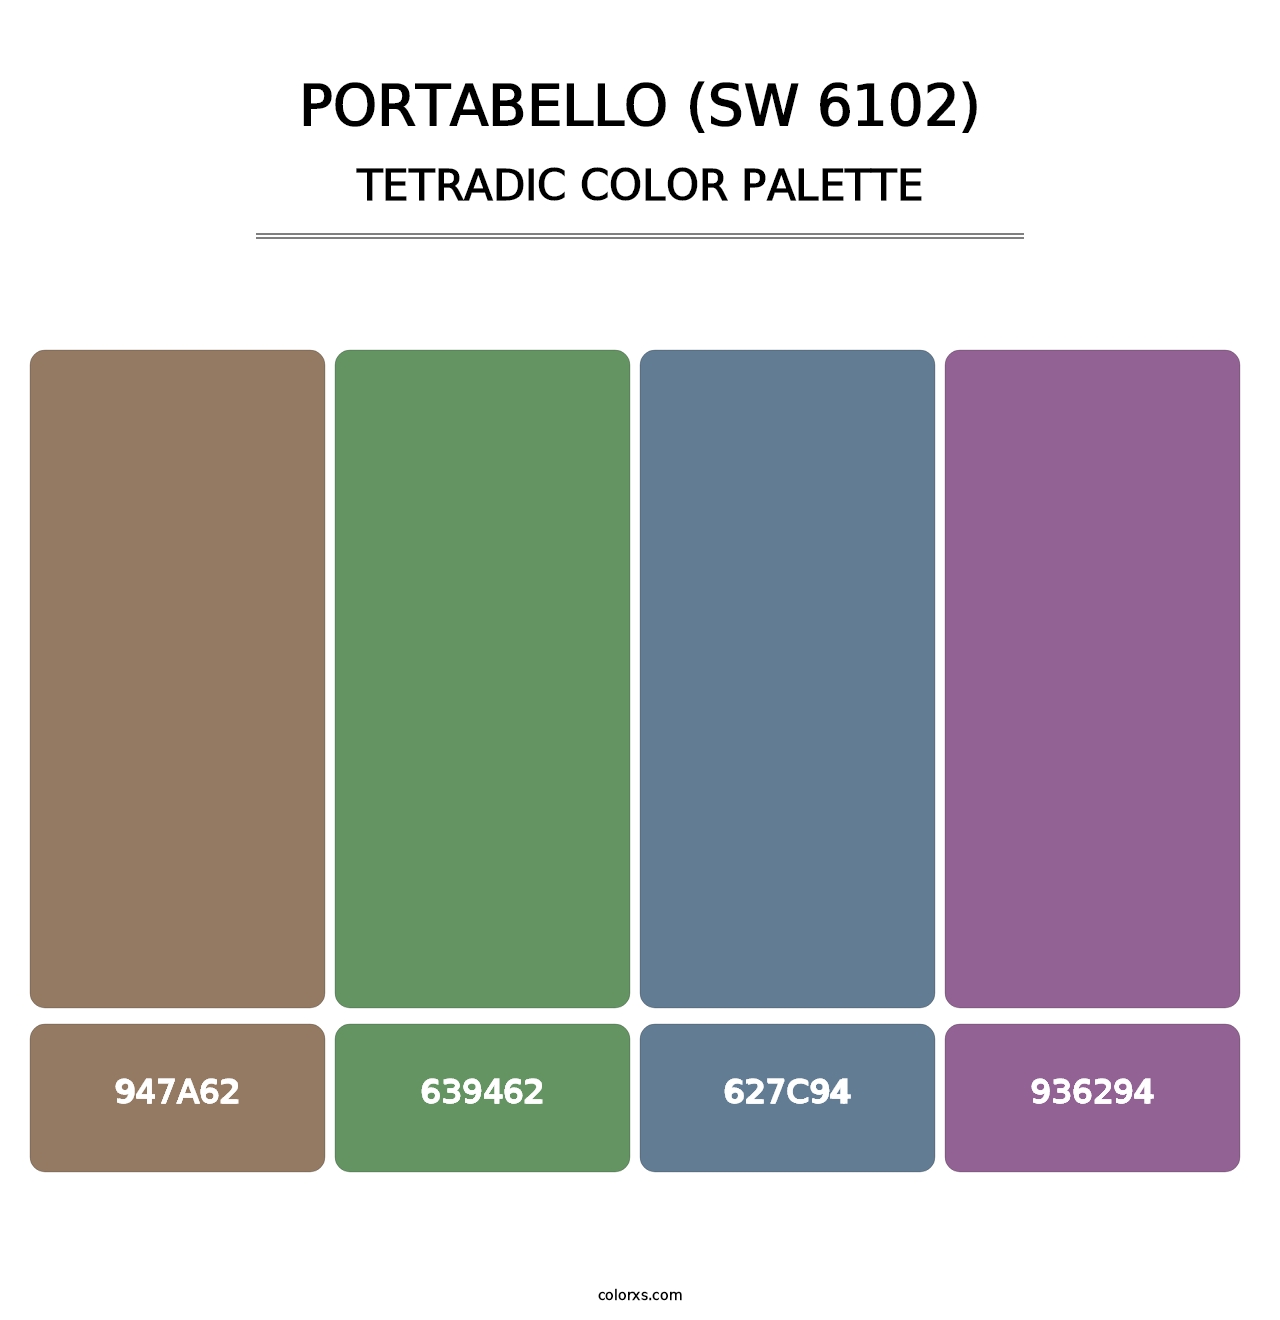 Portabello (SW 6102) - Tetradic Color Palette